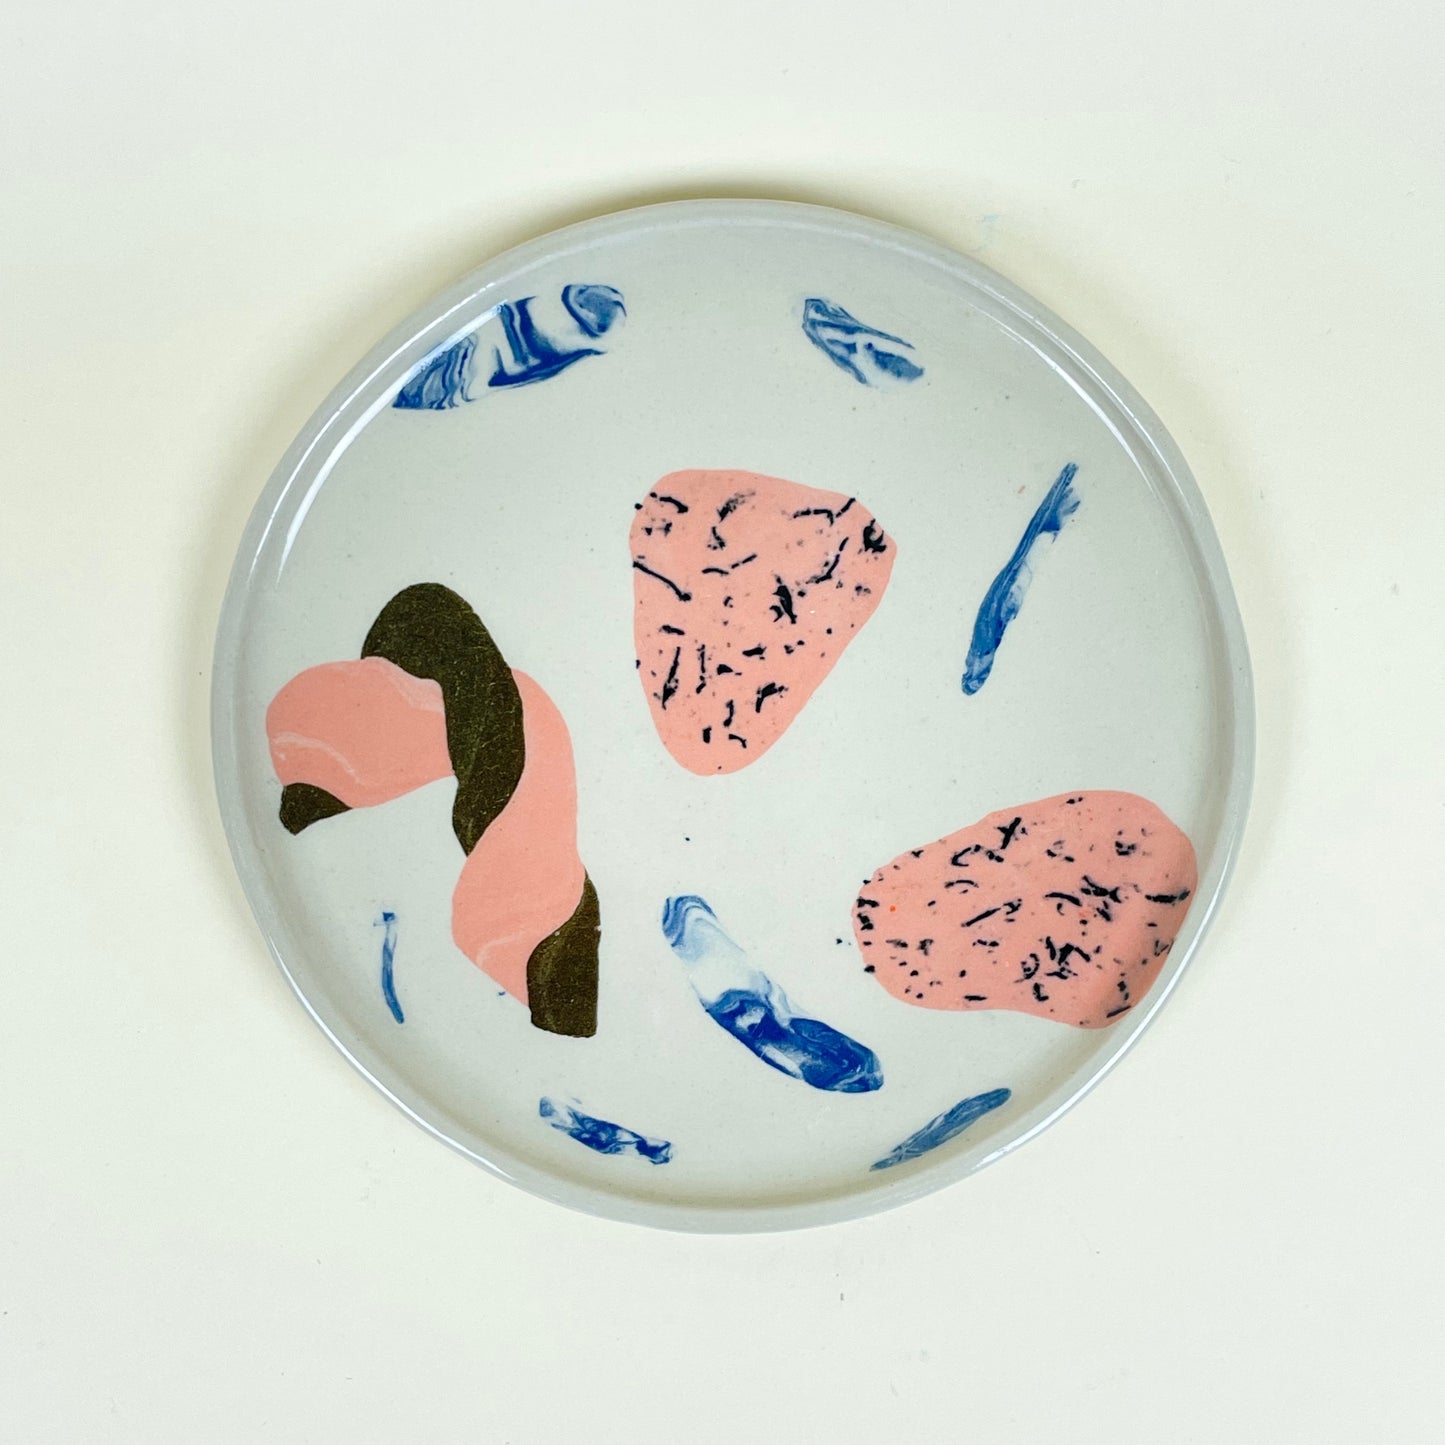 Stoneware plate by Emma Friberg, S